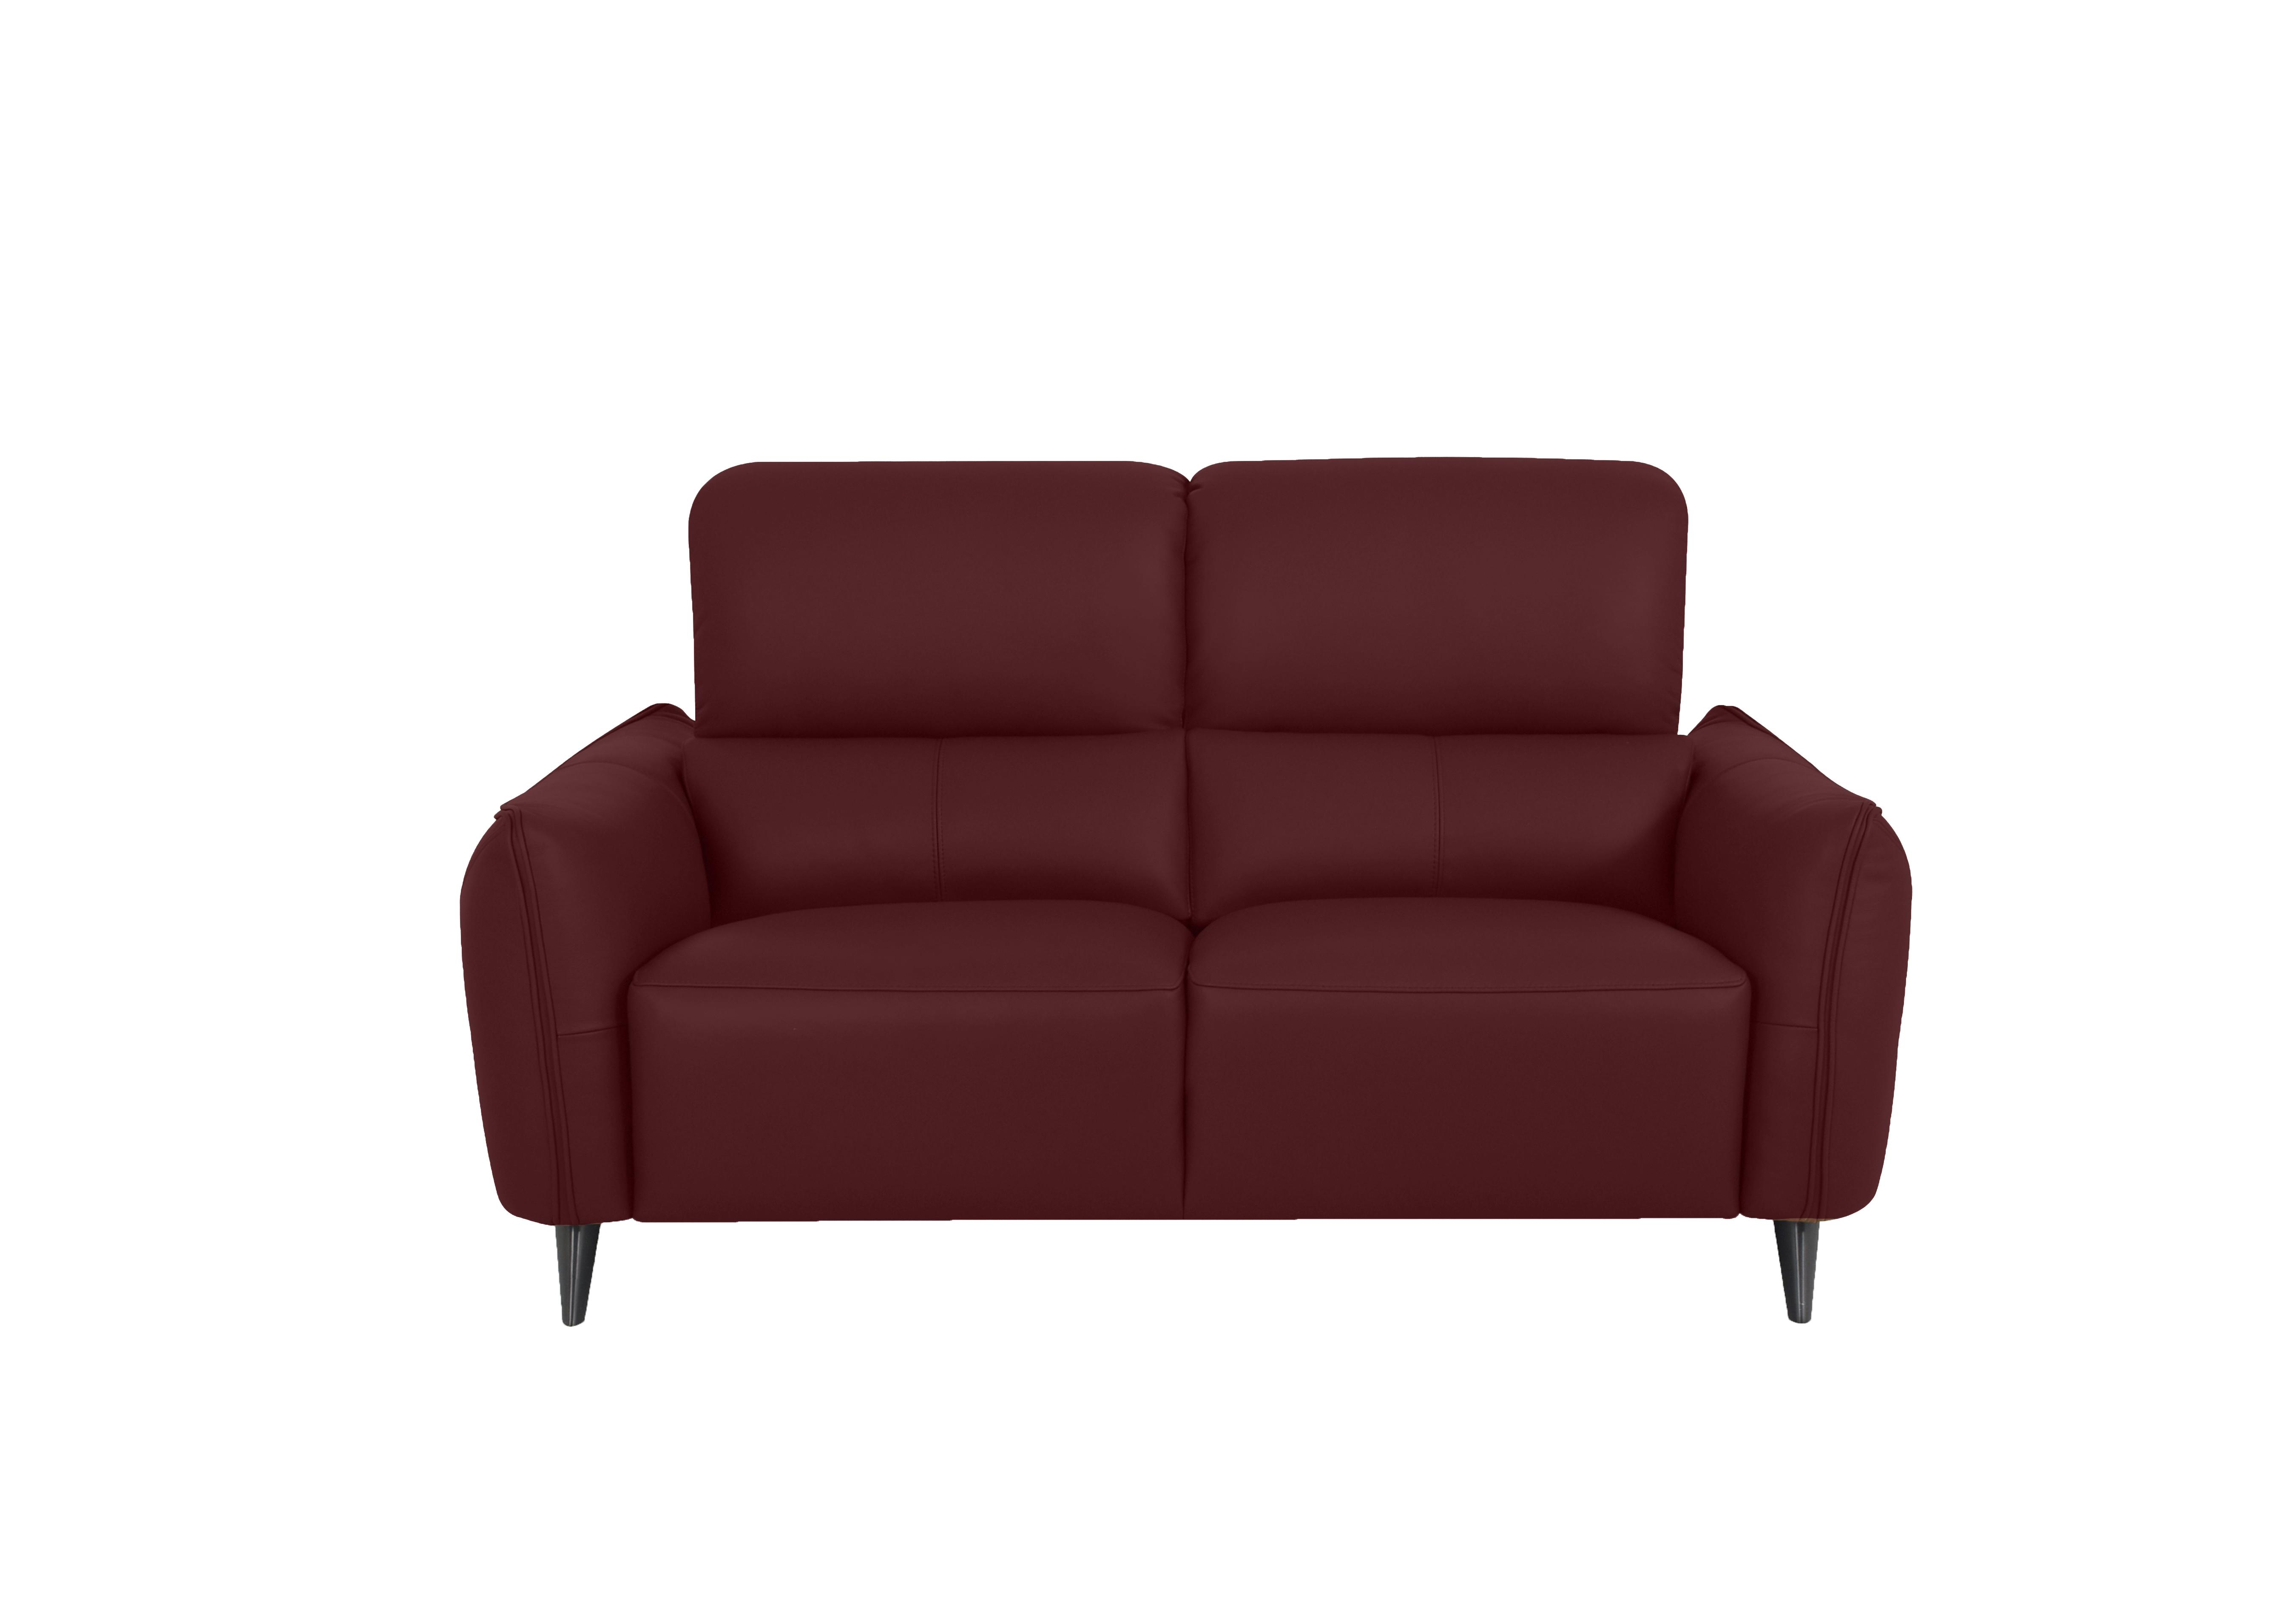 Maddox 2.5 Seater Leather Sofa in Nn-569e Burgundy on Furniture Village